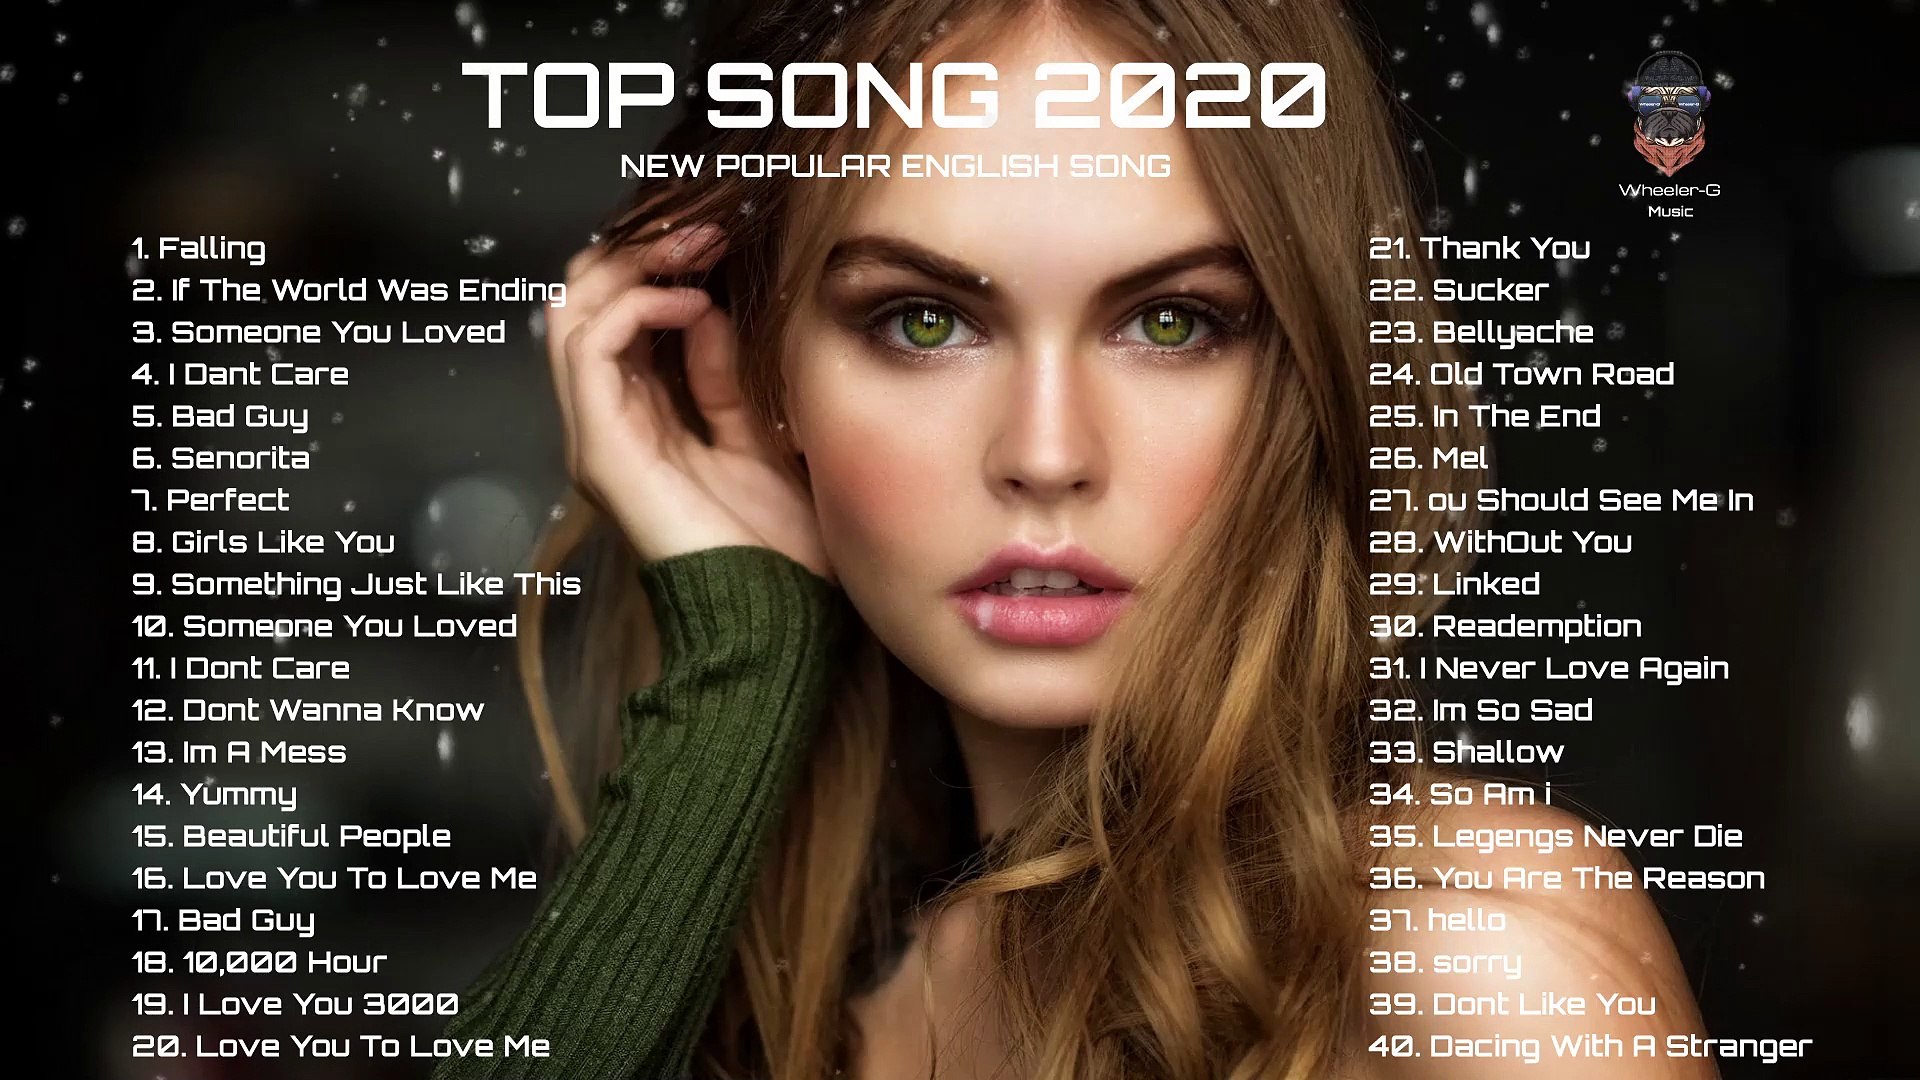 Music Top 50 Song - Music Billboard - Music Top Songs 2020 [ Wheeler-G]